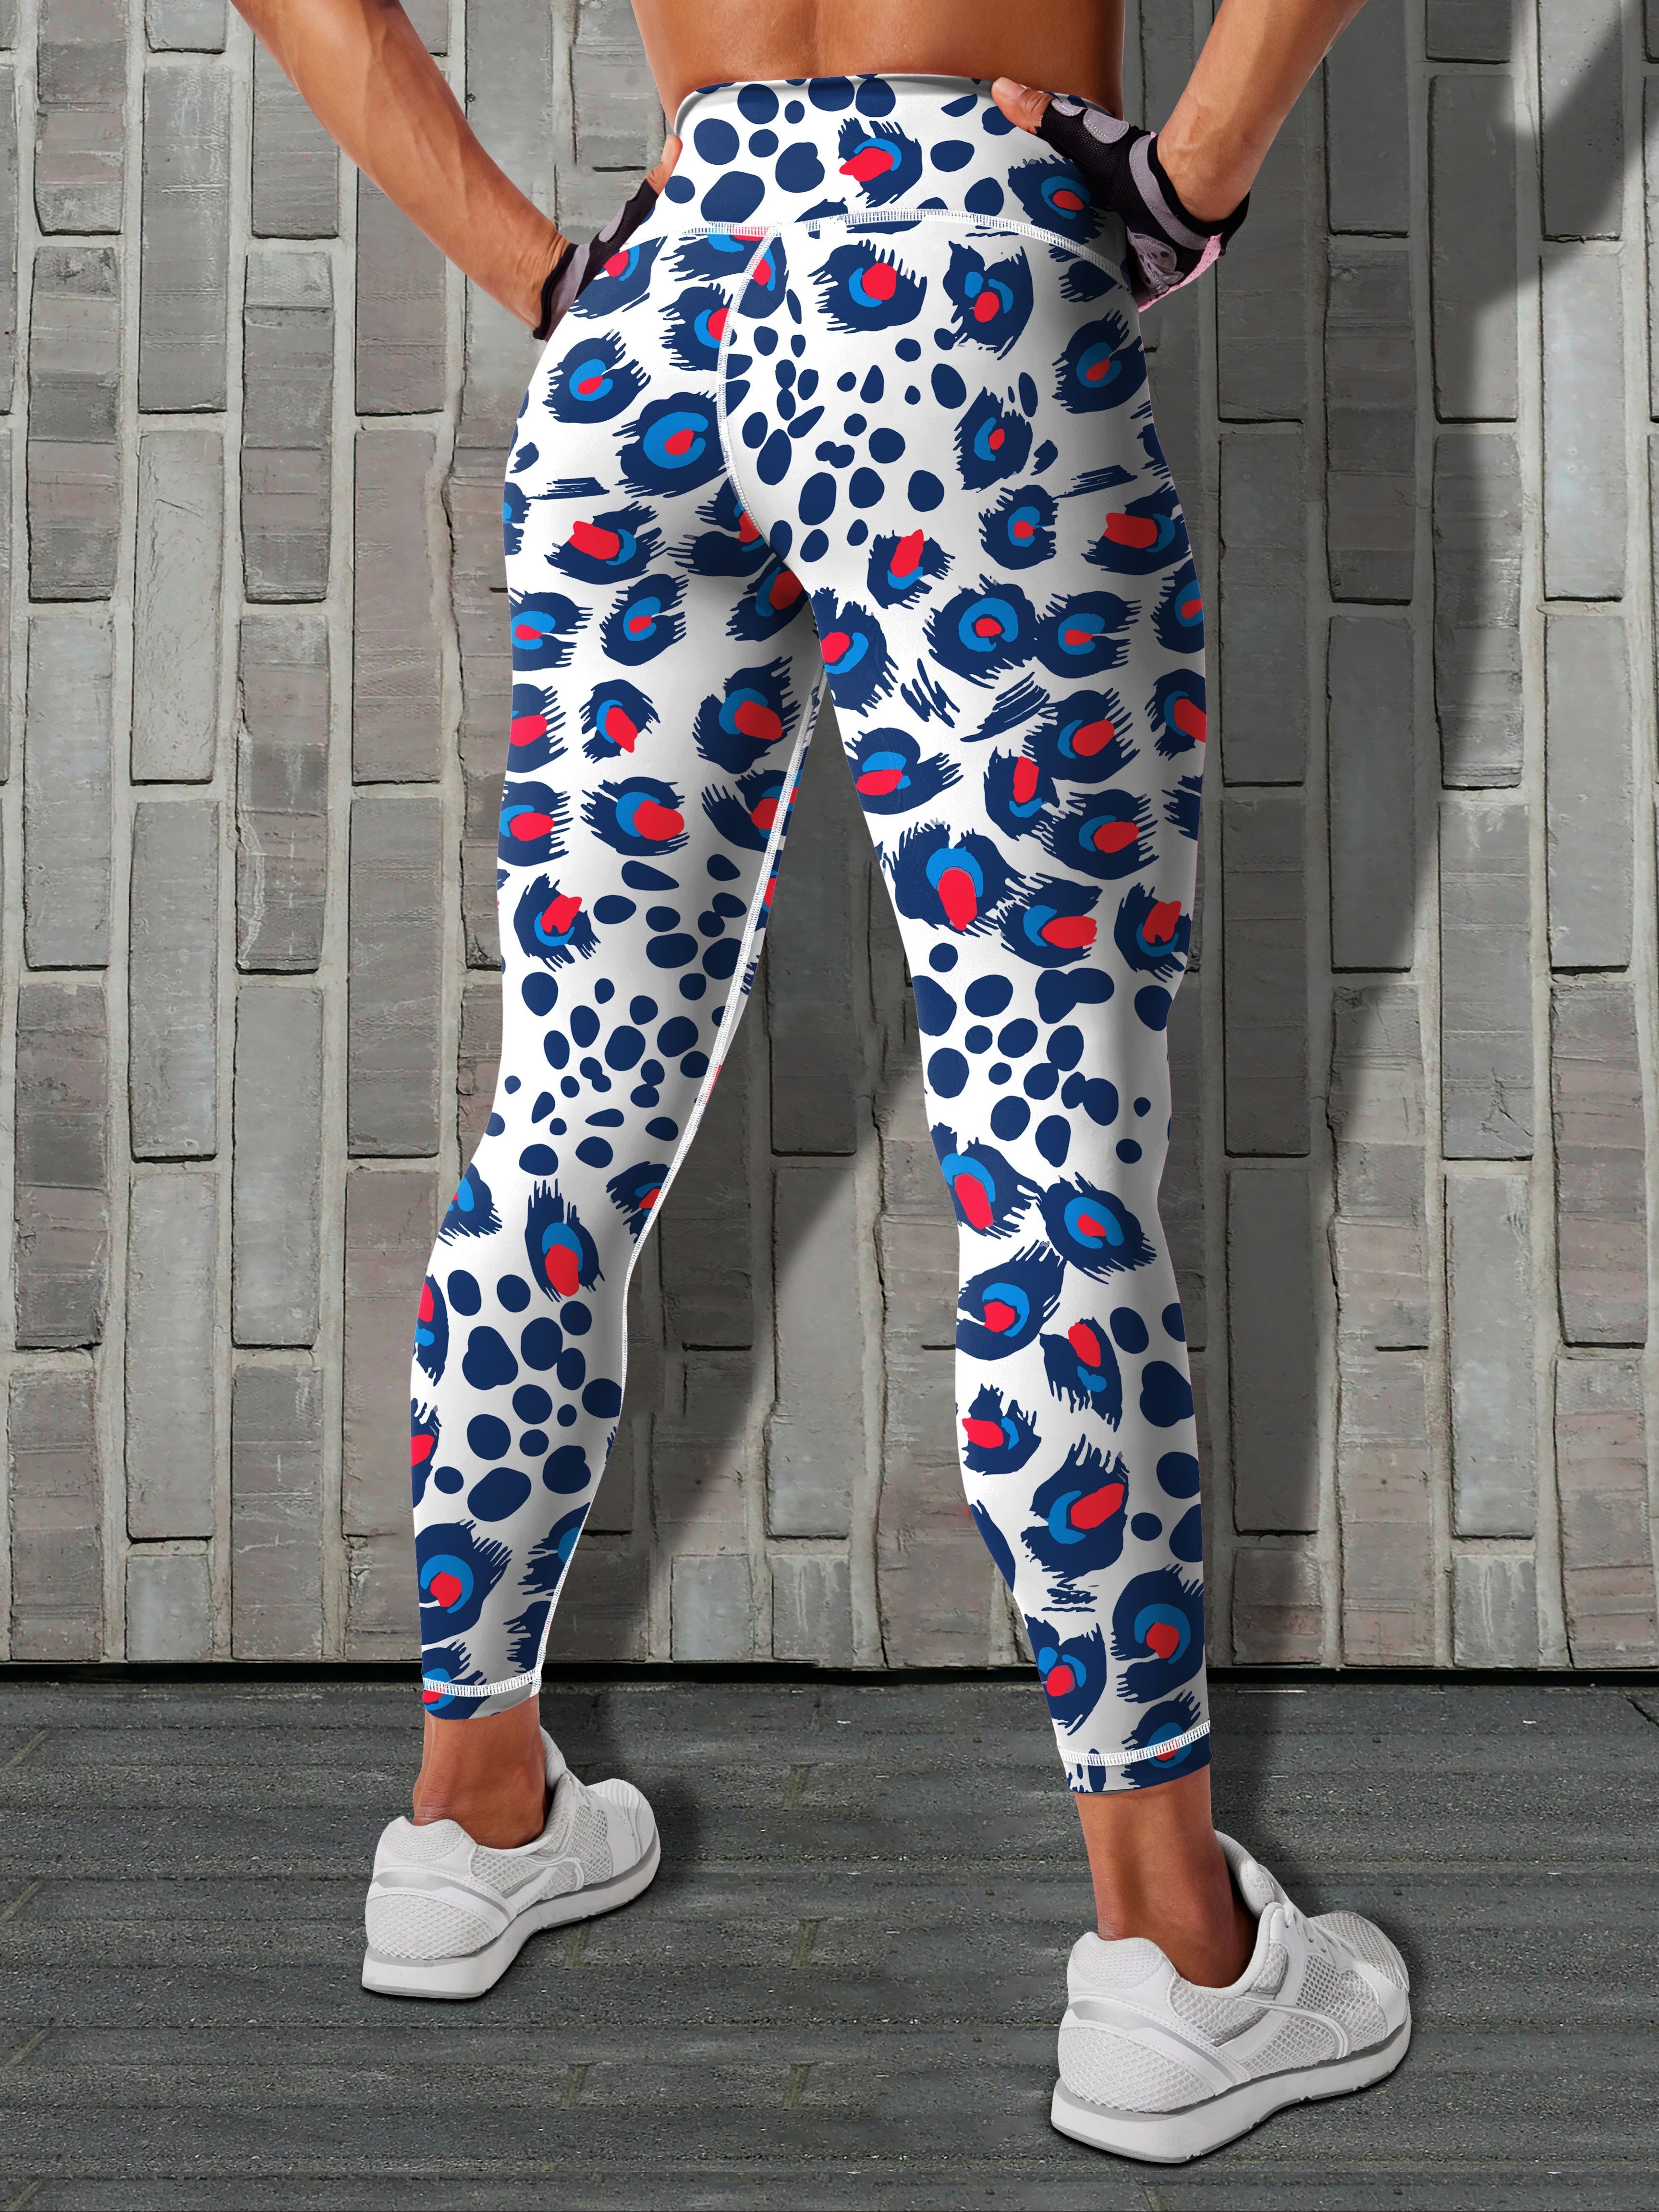 Leopard Print Fashion High Elastic Fitness Pants, High Elastic Sports Tight  Yoga Leggings, Women's Activewear